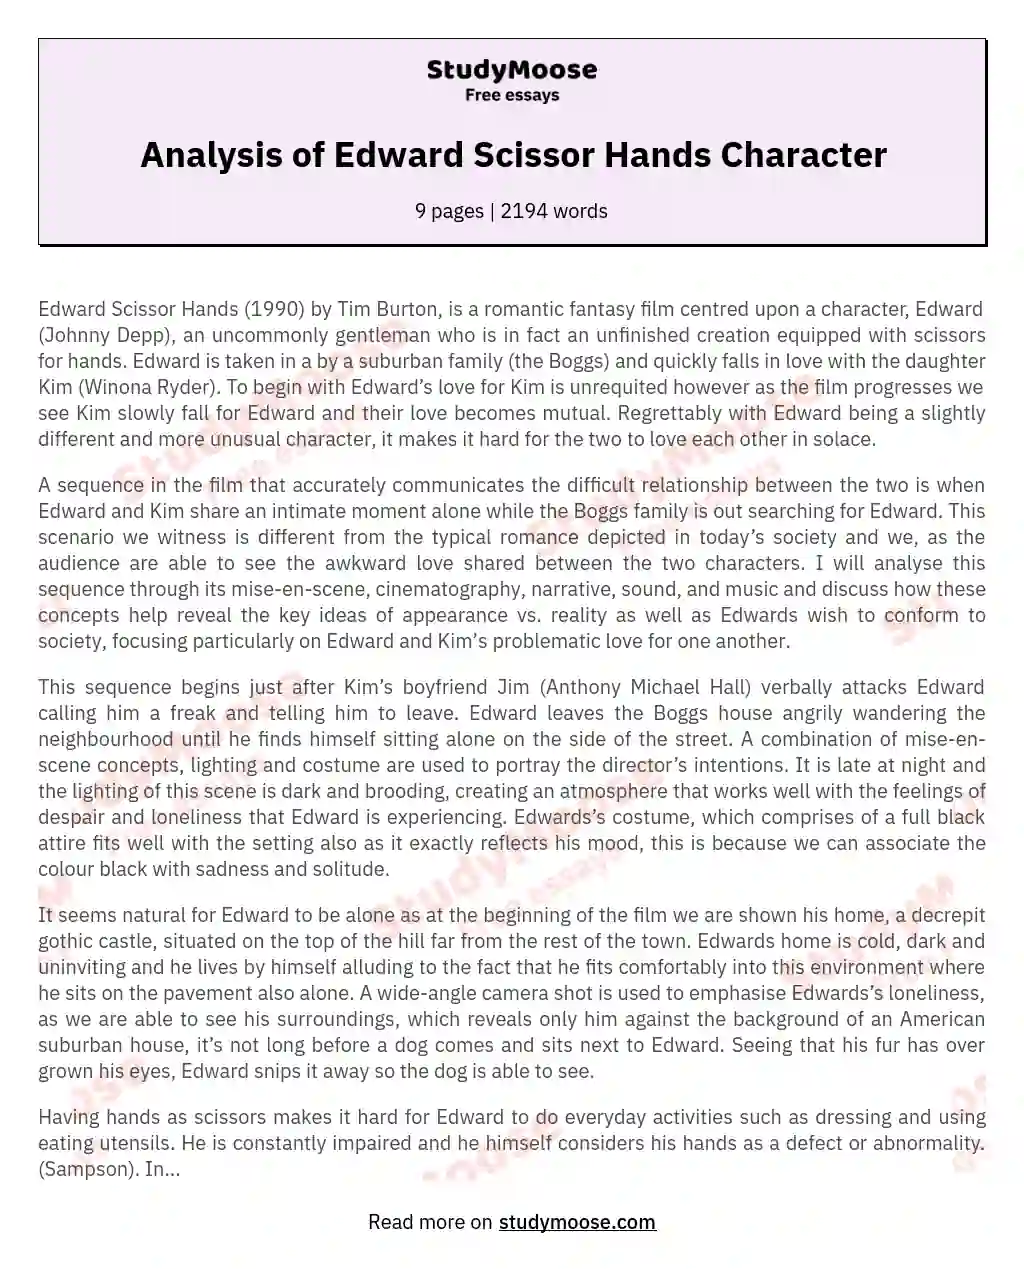 Analysis of Edward Scissor Hands Character essay